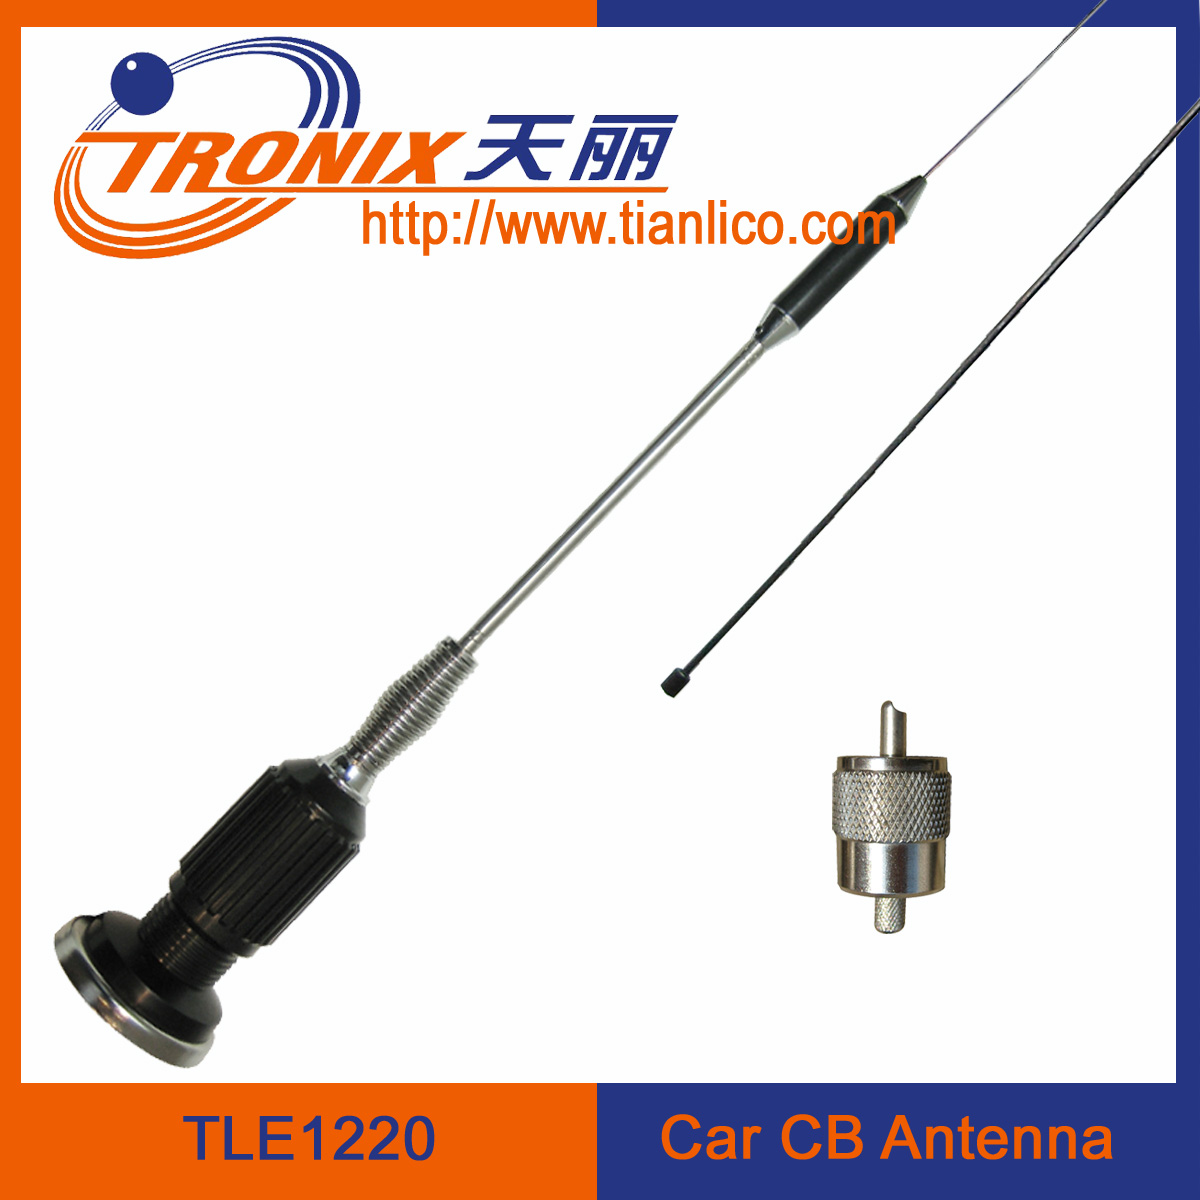 Cheap 27mhz radio cb antenna/ magnetic mount cb car antenna/ car cb antenna TLE1220 for sale